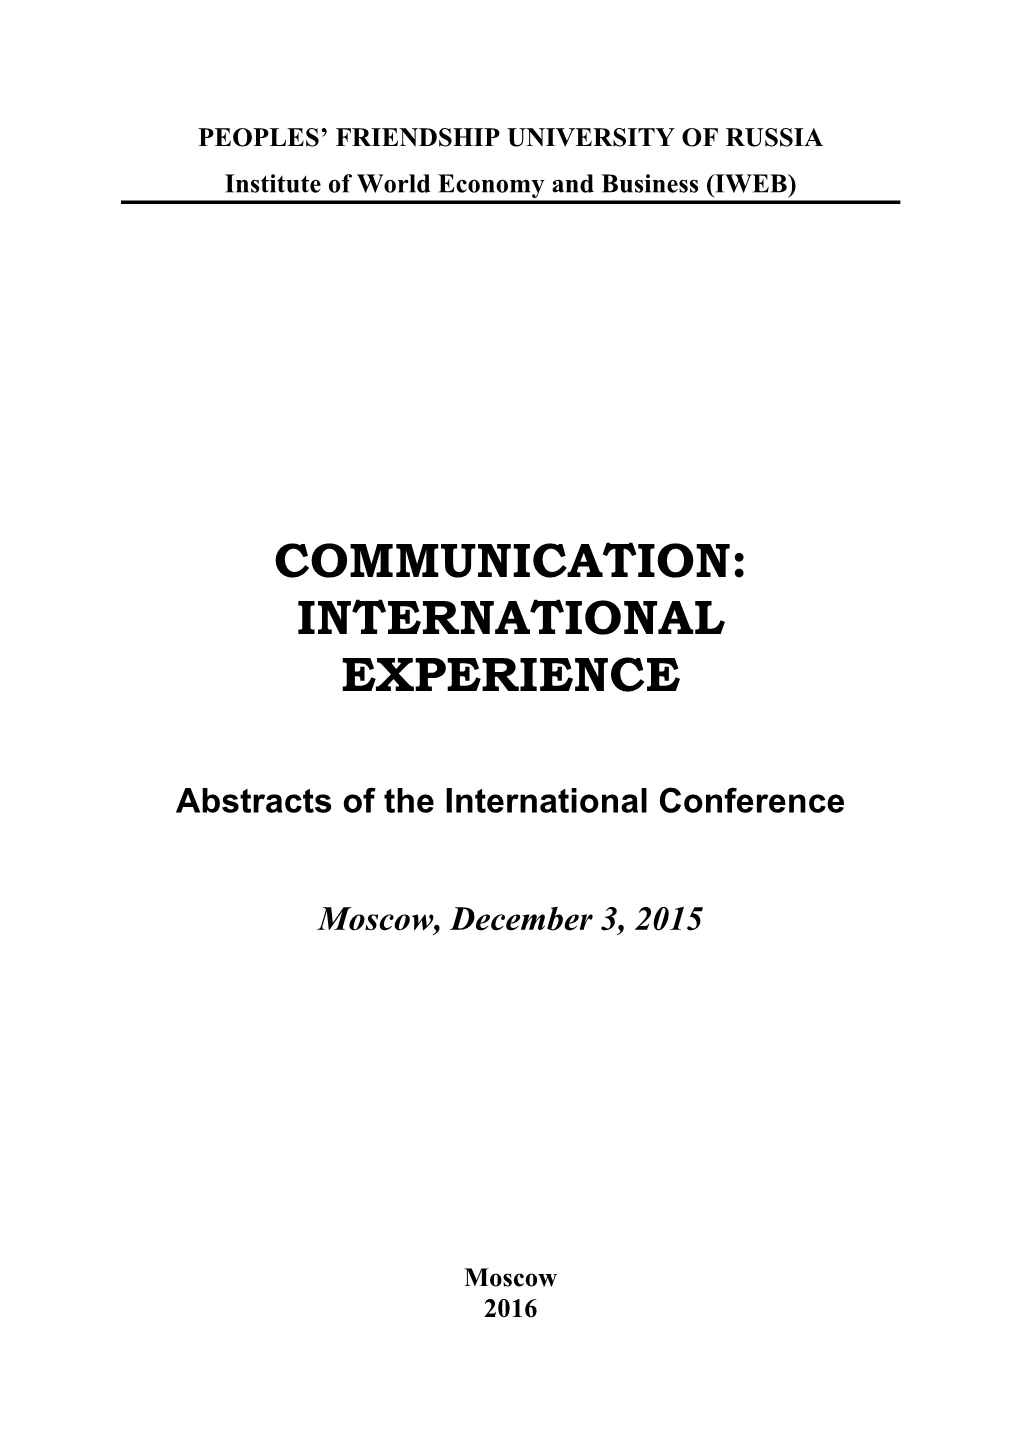 Communication: International Experience